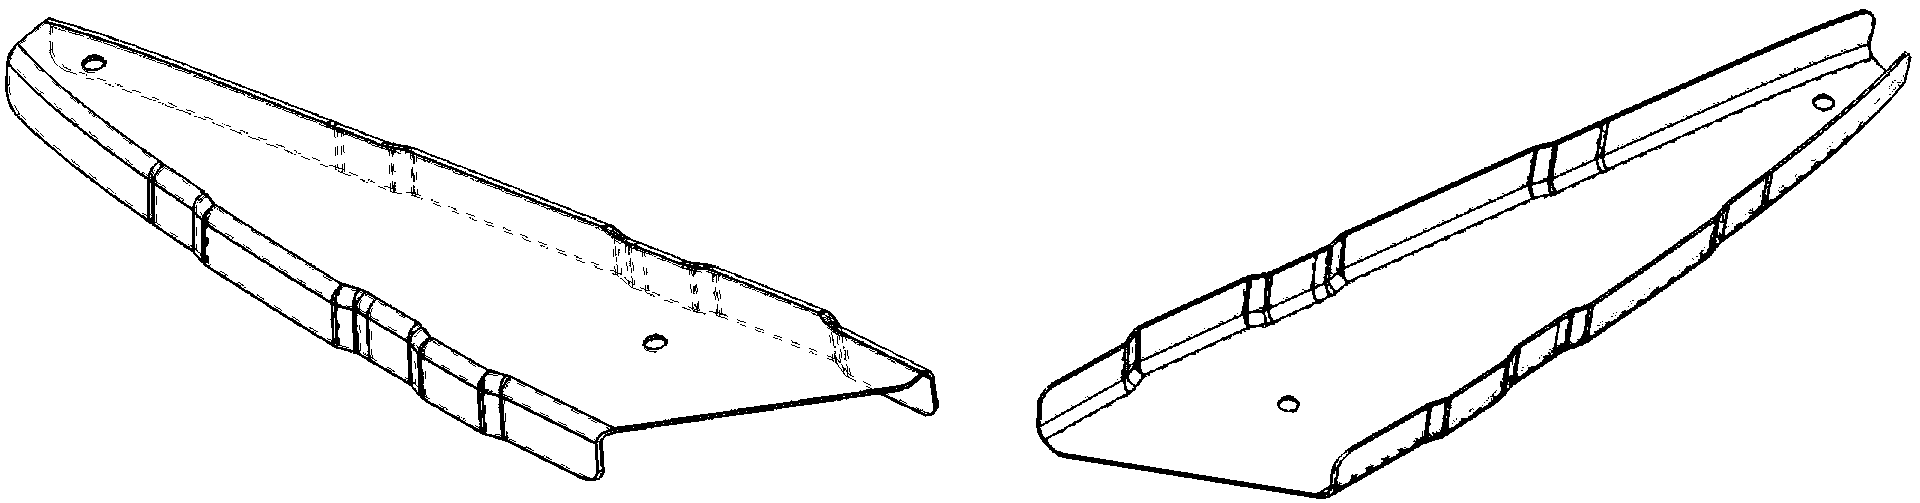 Design method of airplane frame and rib type sheet metal part processing model